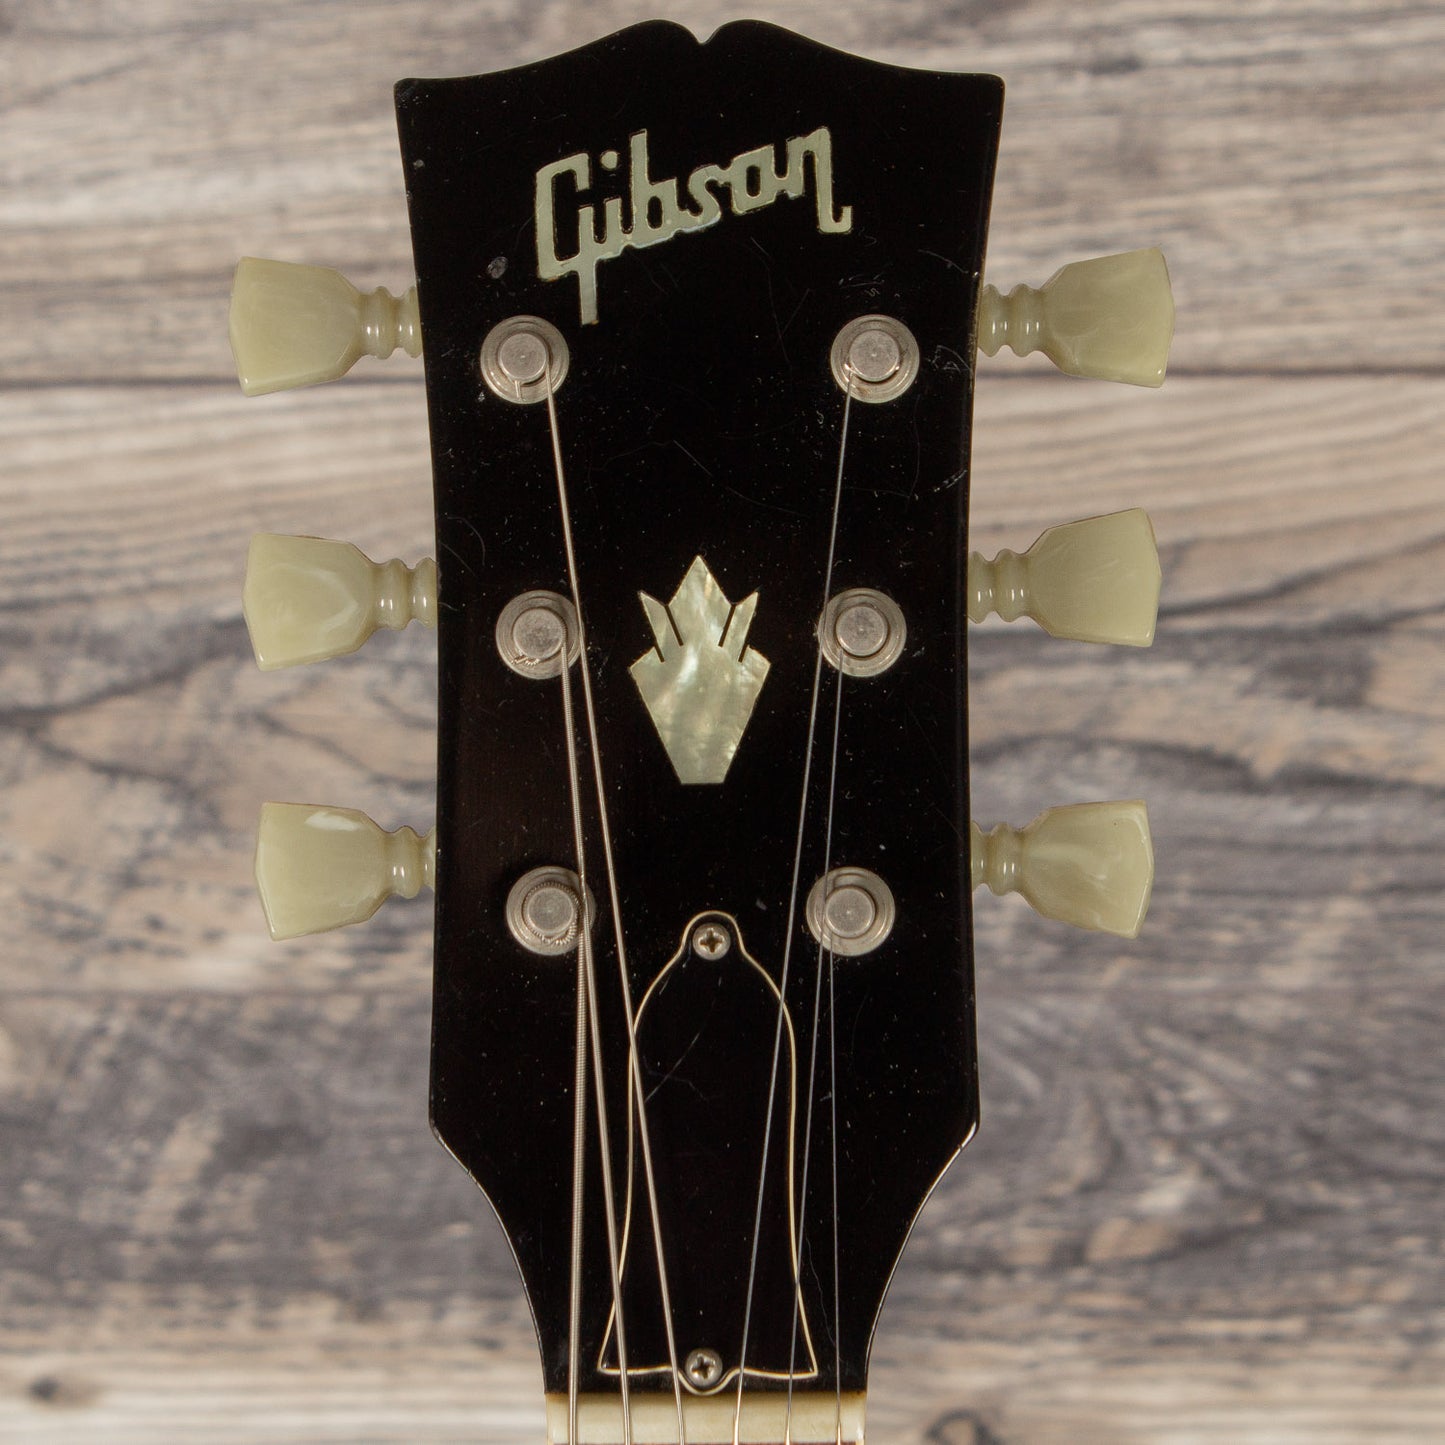 1970 Gibson SG Standard - Walnut